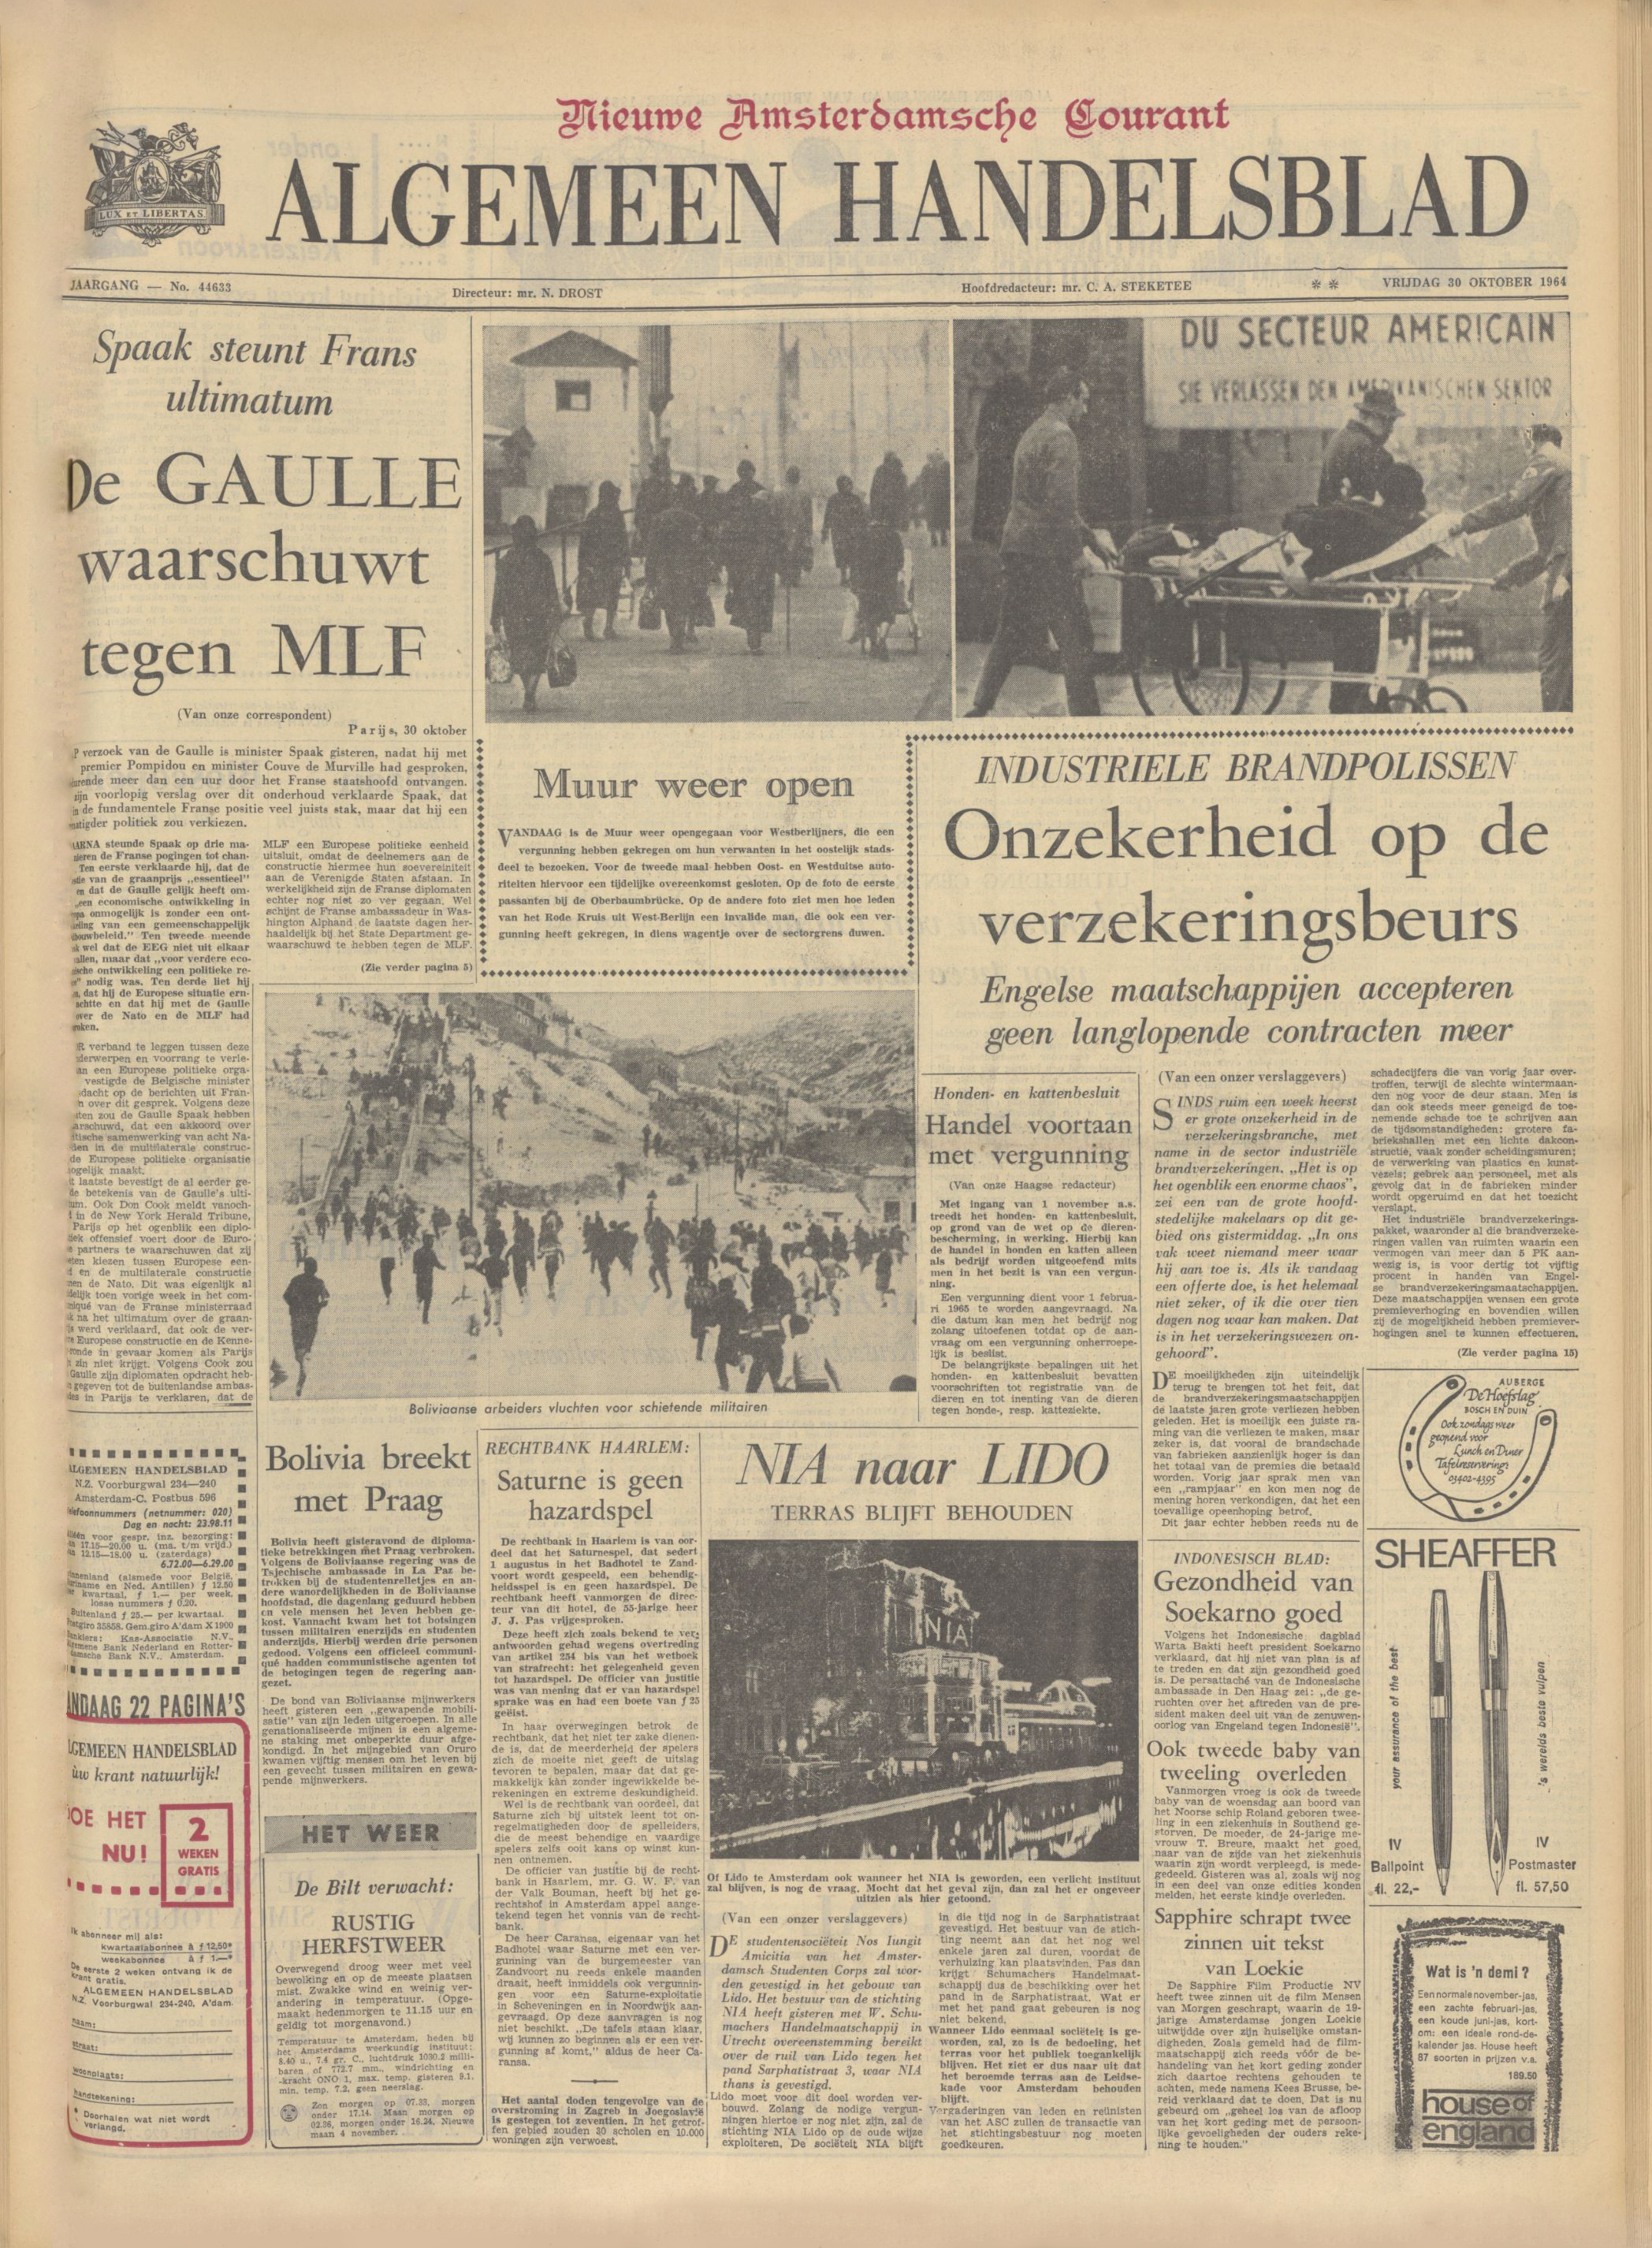 Amsterdams Dagblad vom 19. Juli 1945